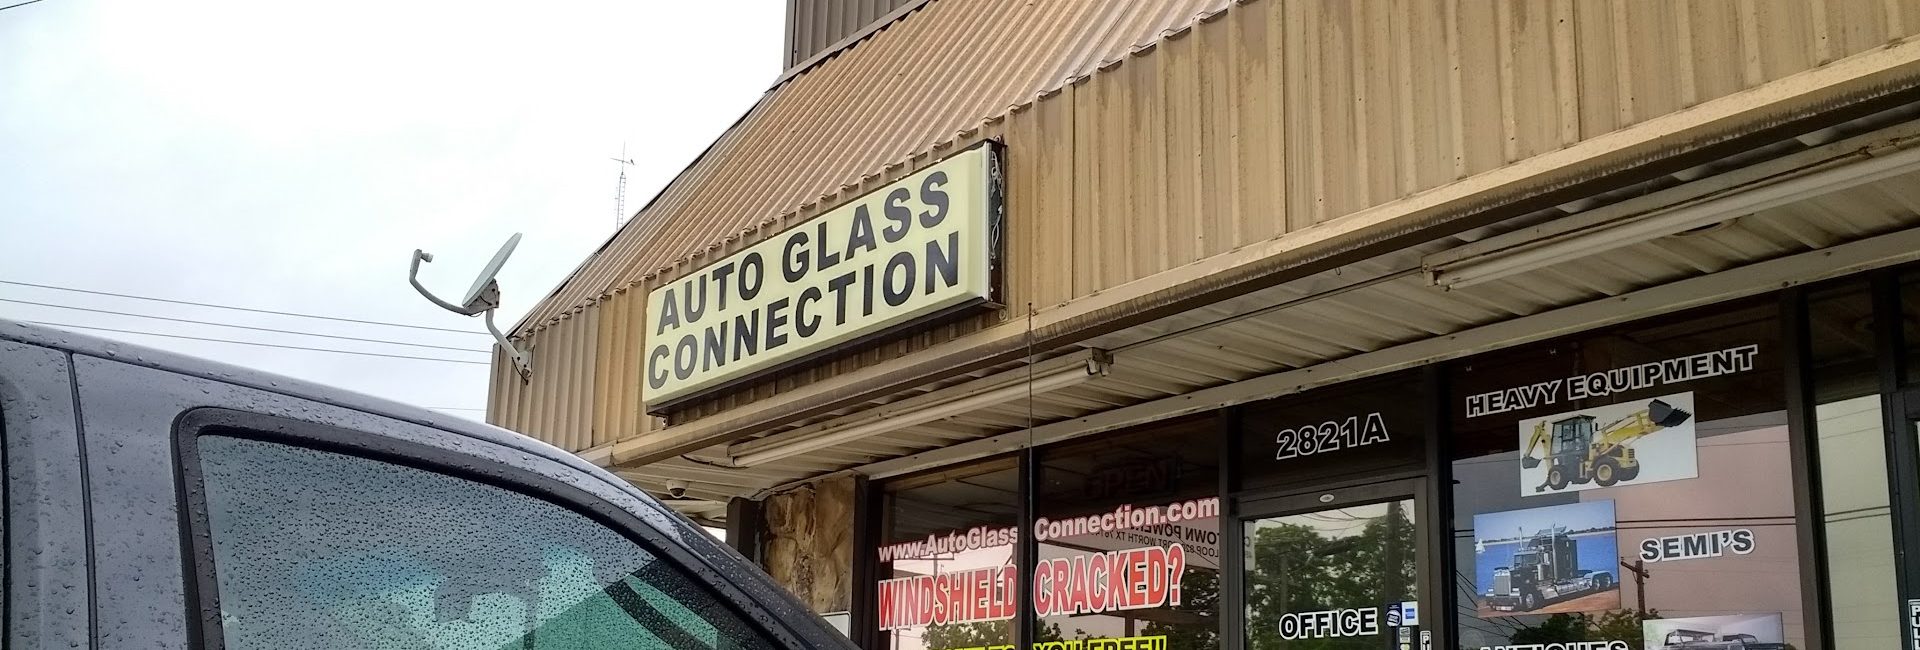 Auto Glass Connection 2